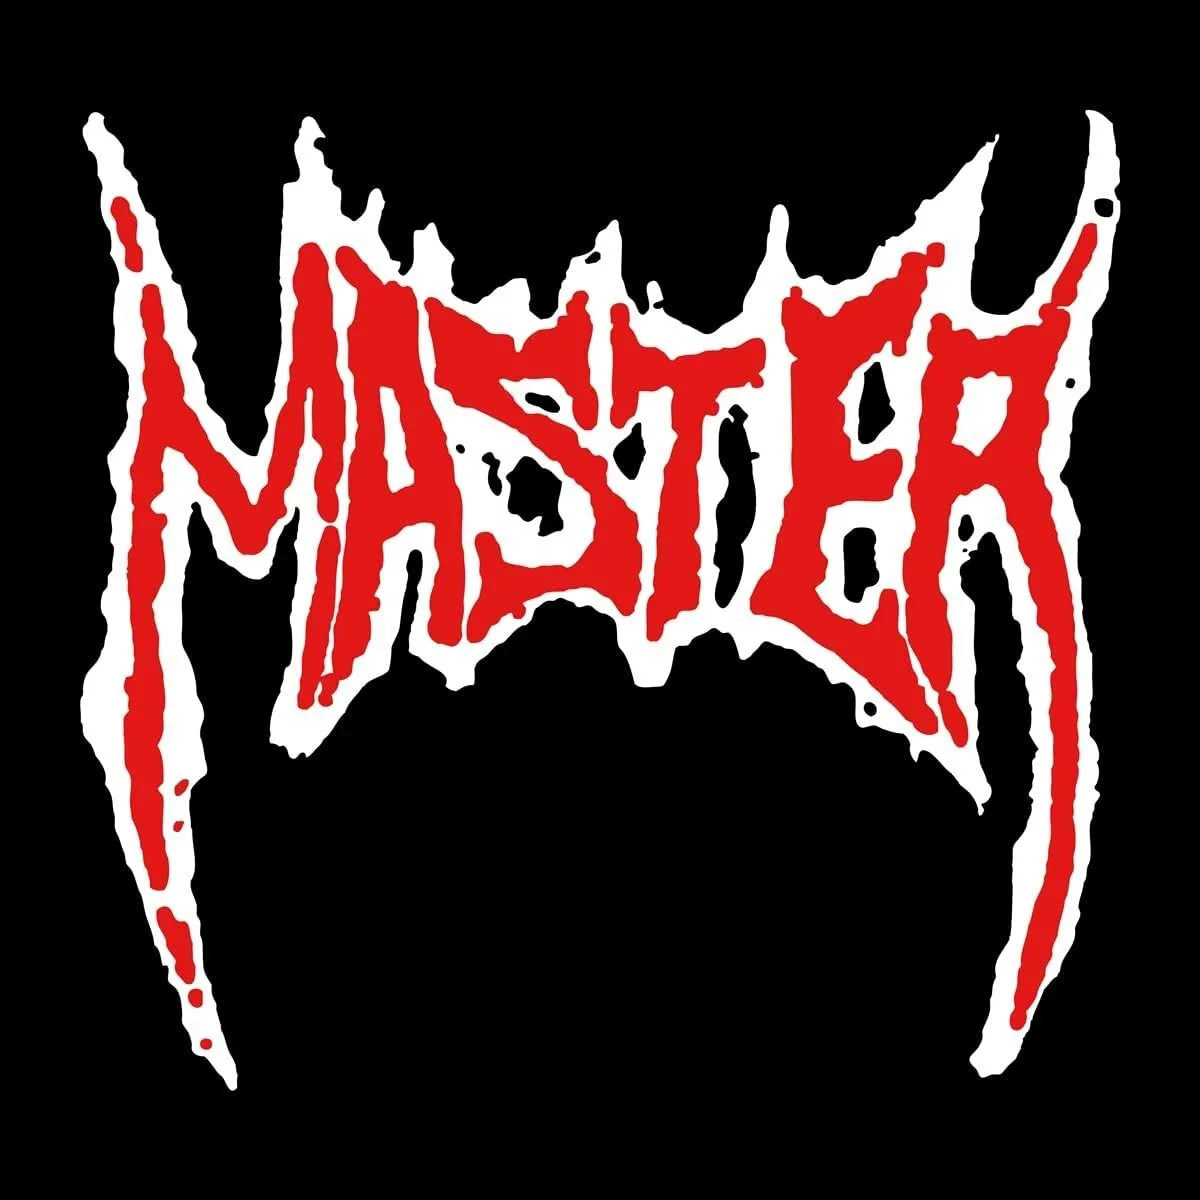 MASTER - Master [BLACK LP]